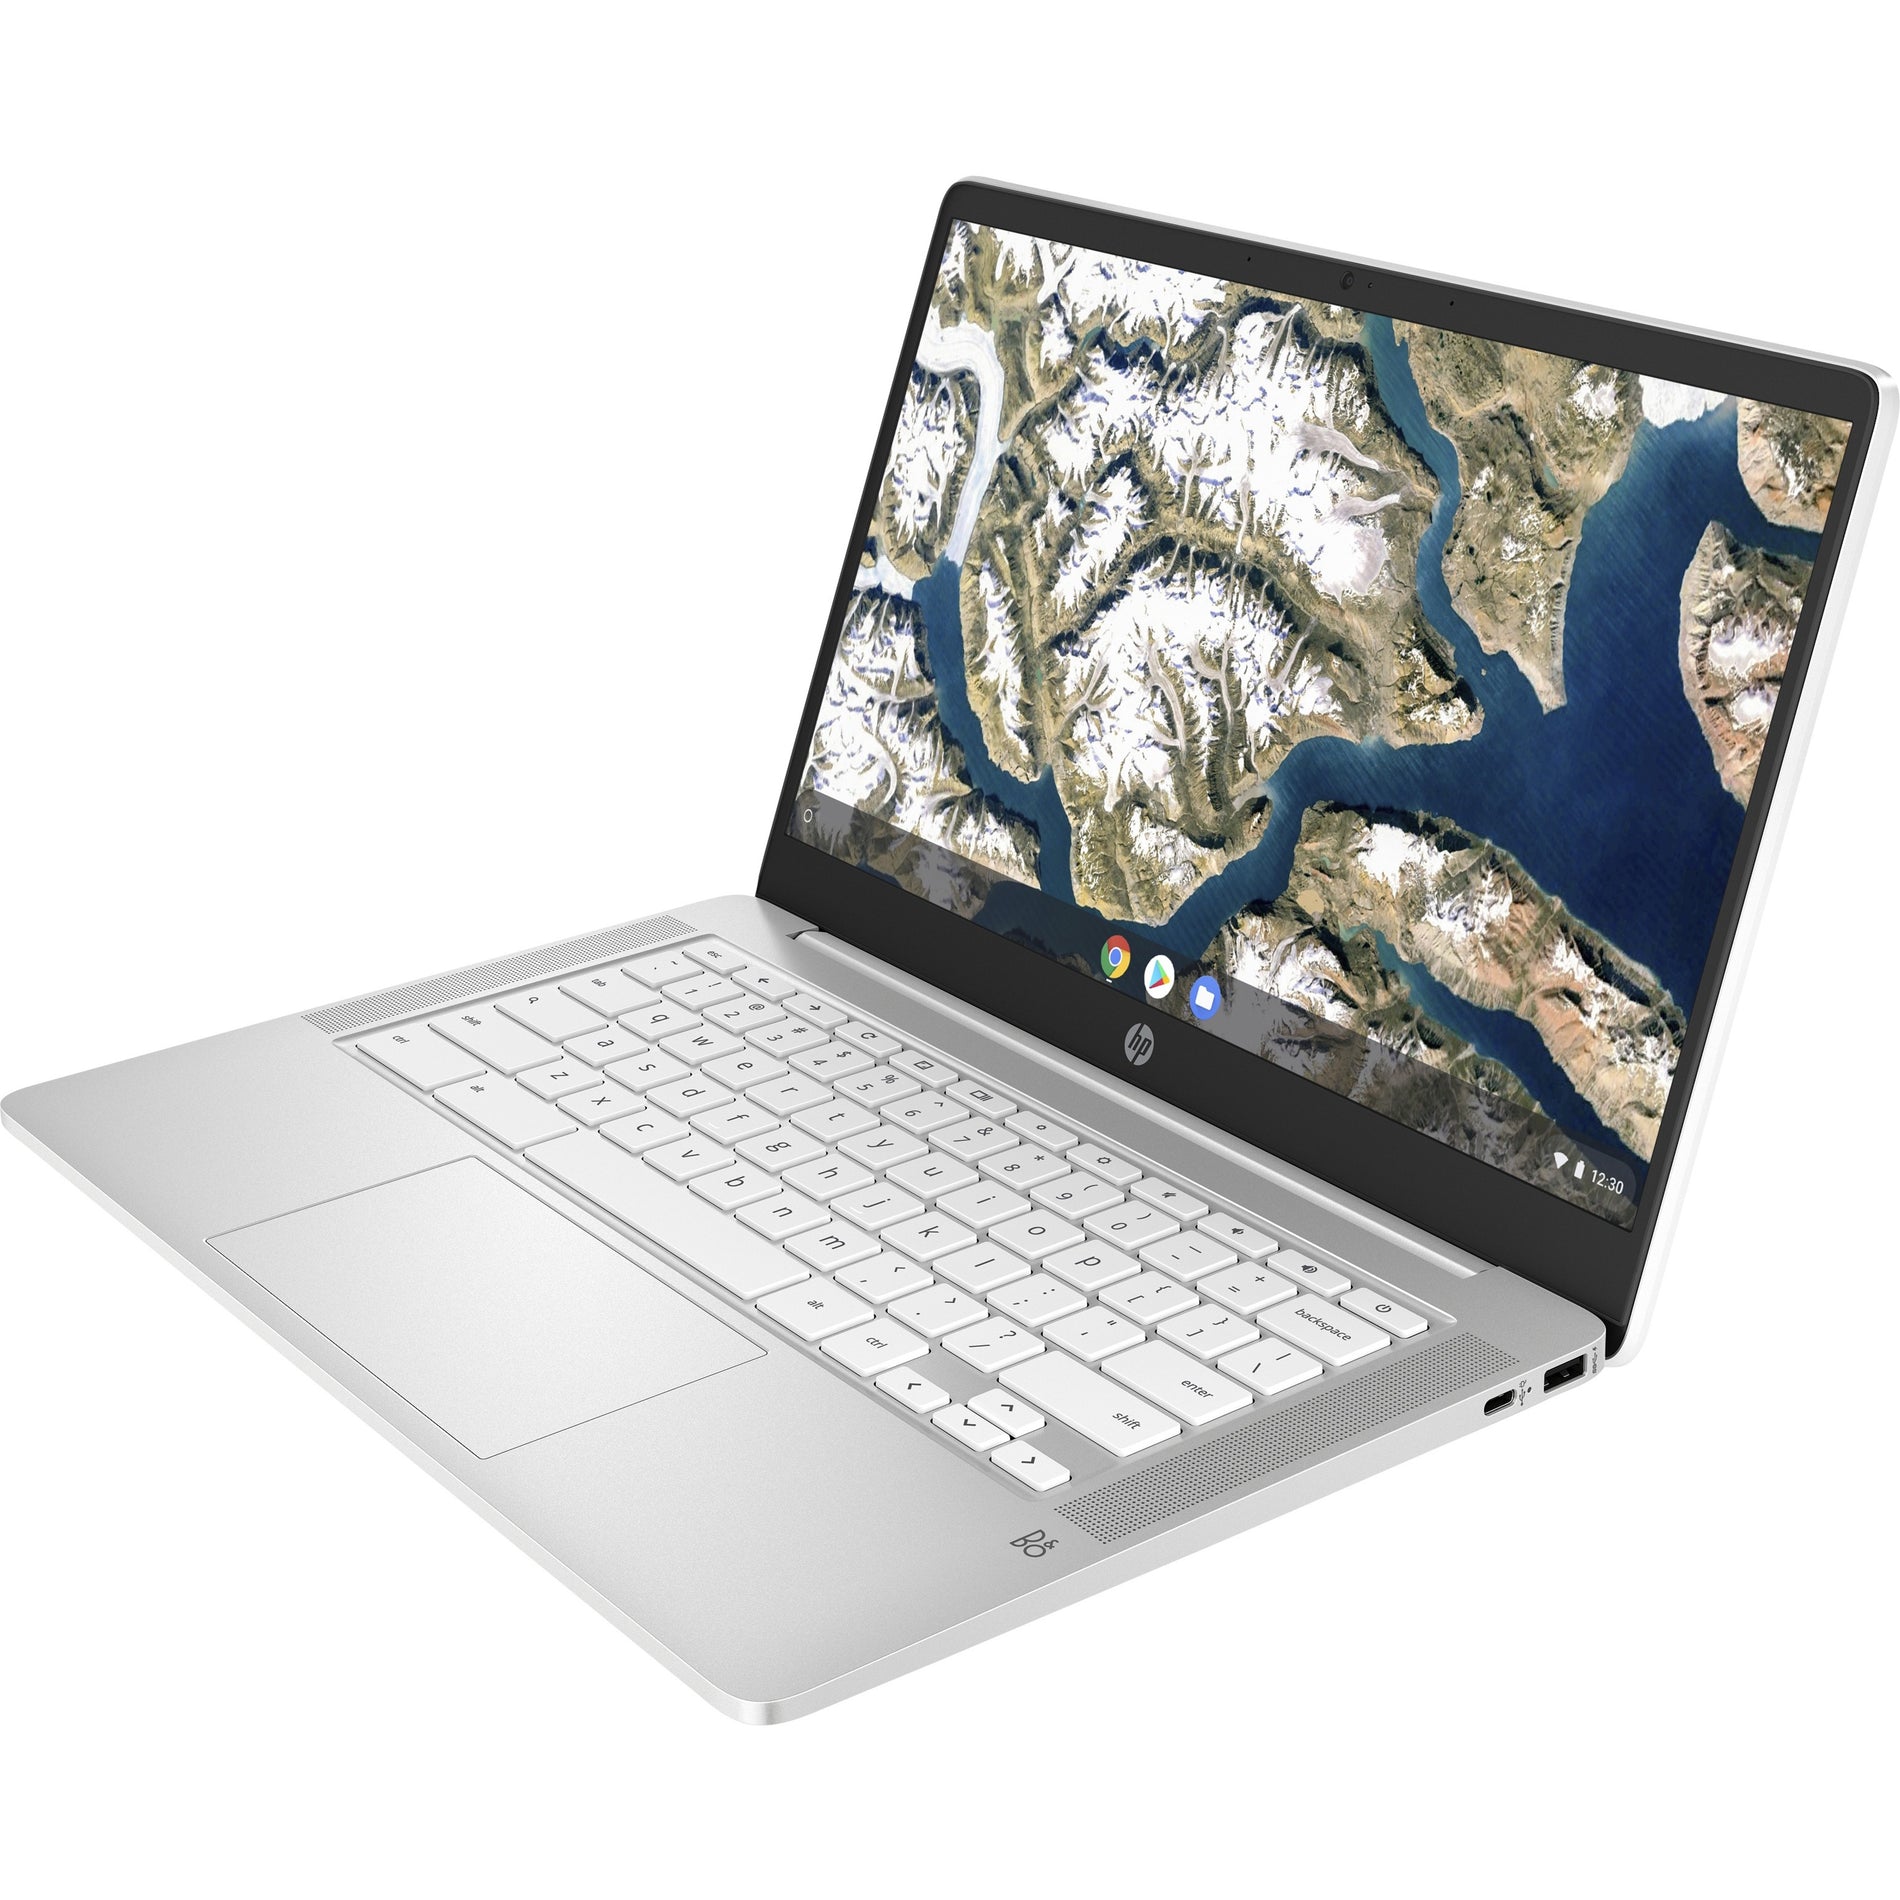 Marca: HP Chromebook 14a-na0240nr 14" Pantalla táctil Chromebook Intel Celeron N4120 Quad-core 4GB RAM 64GB Memoria Flash Blanco cerámico